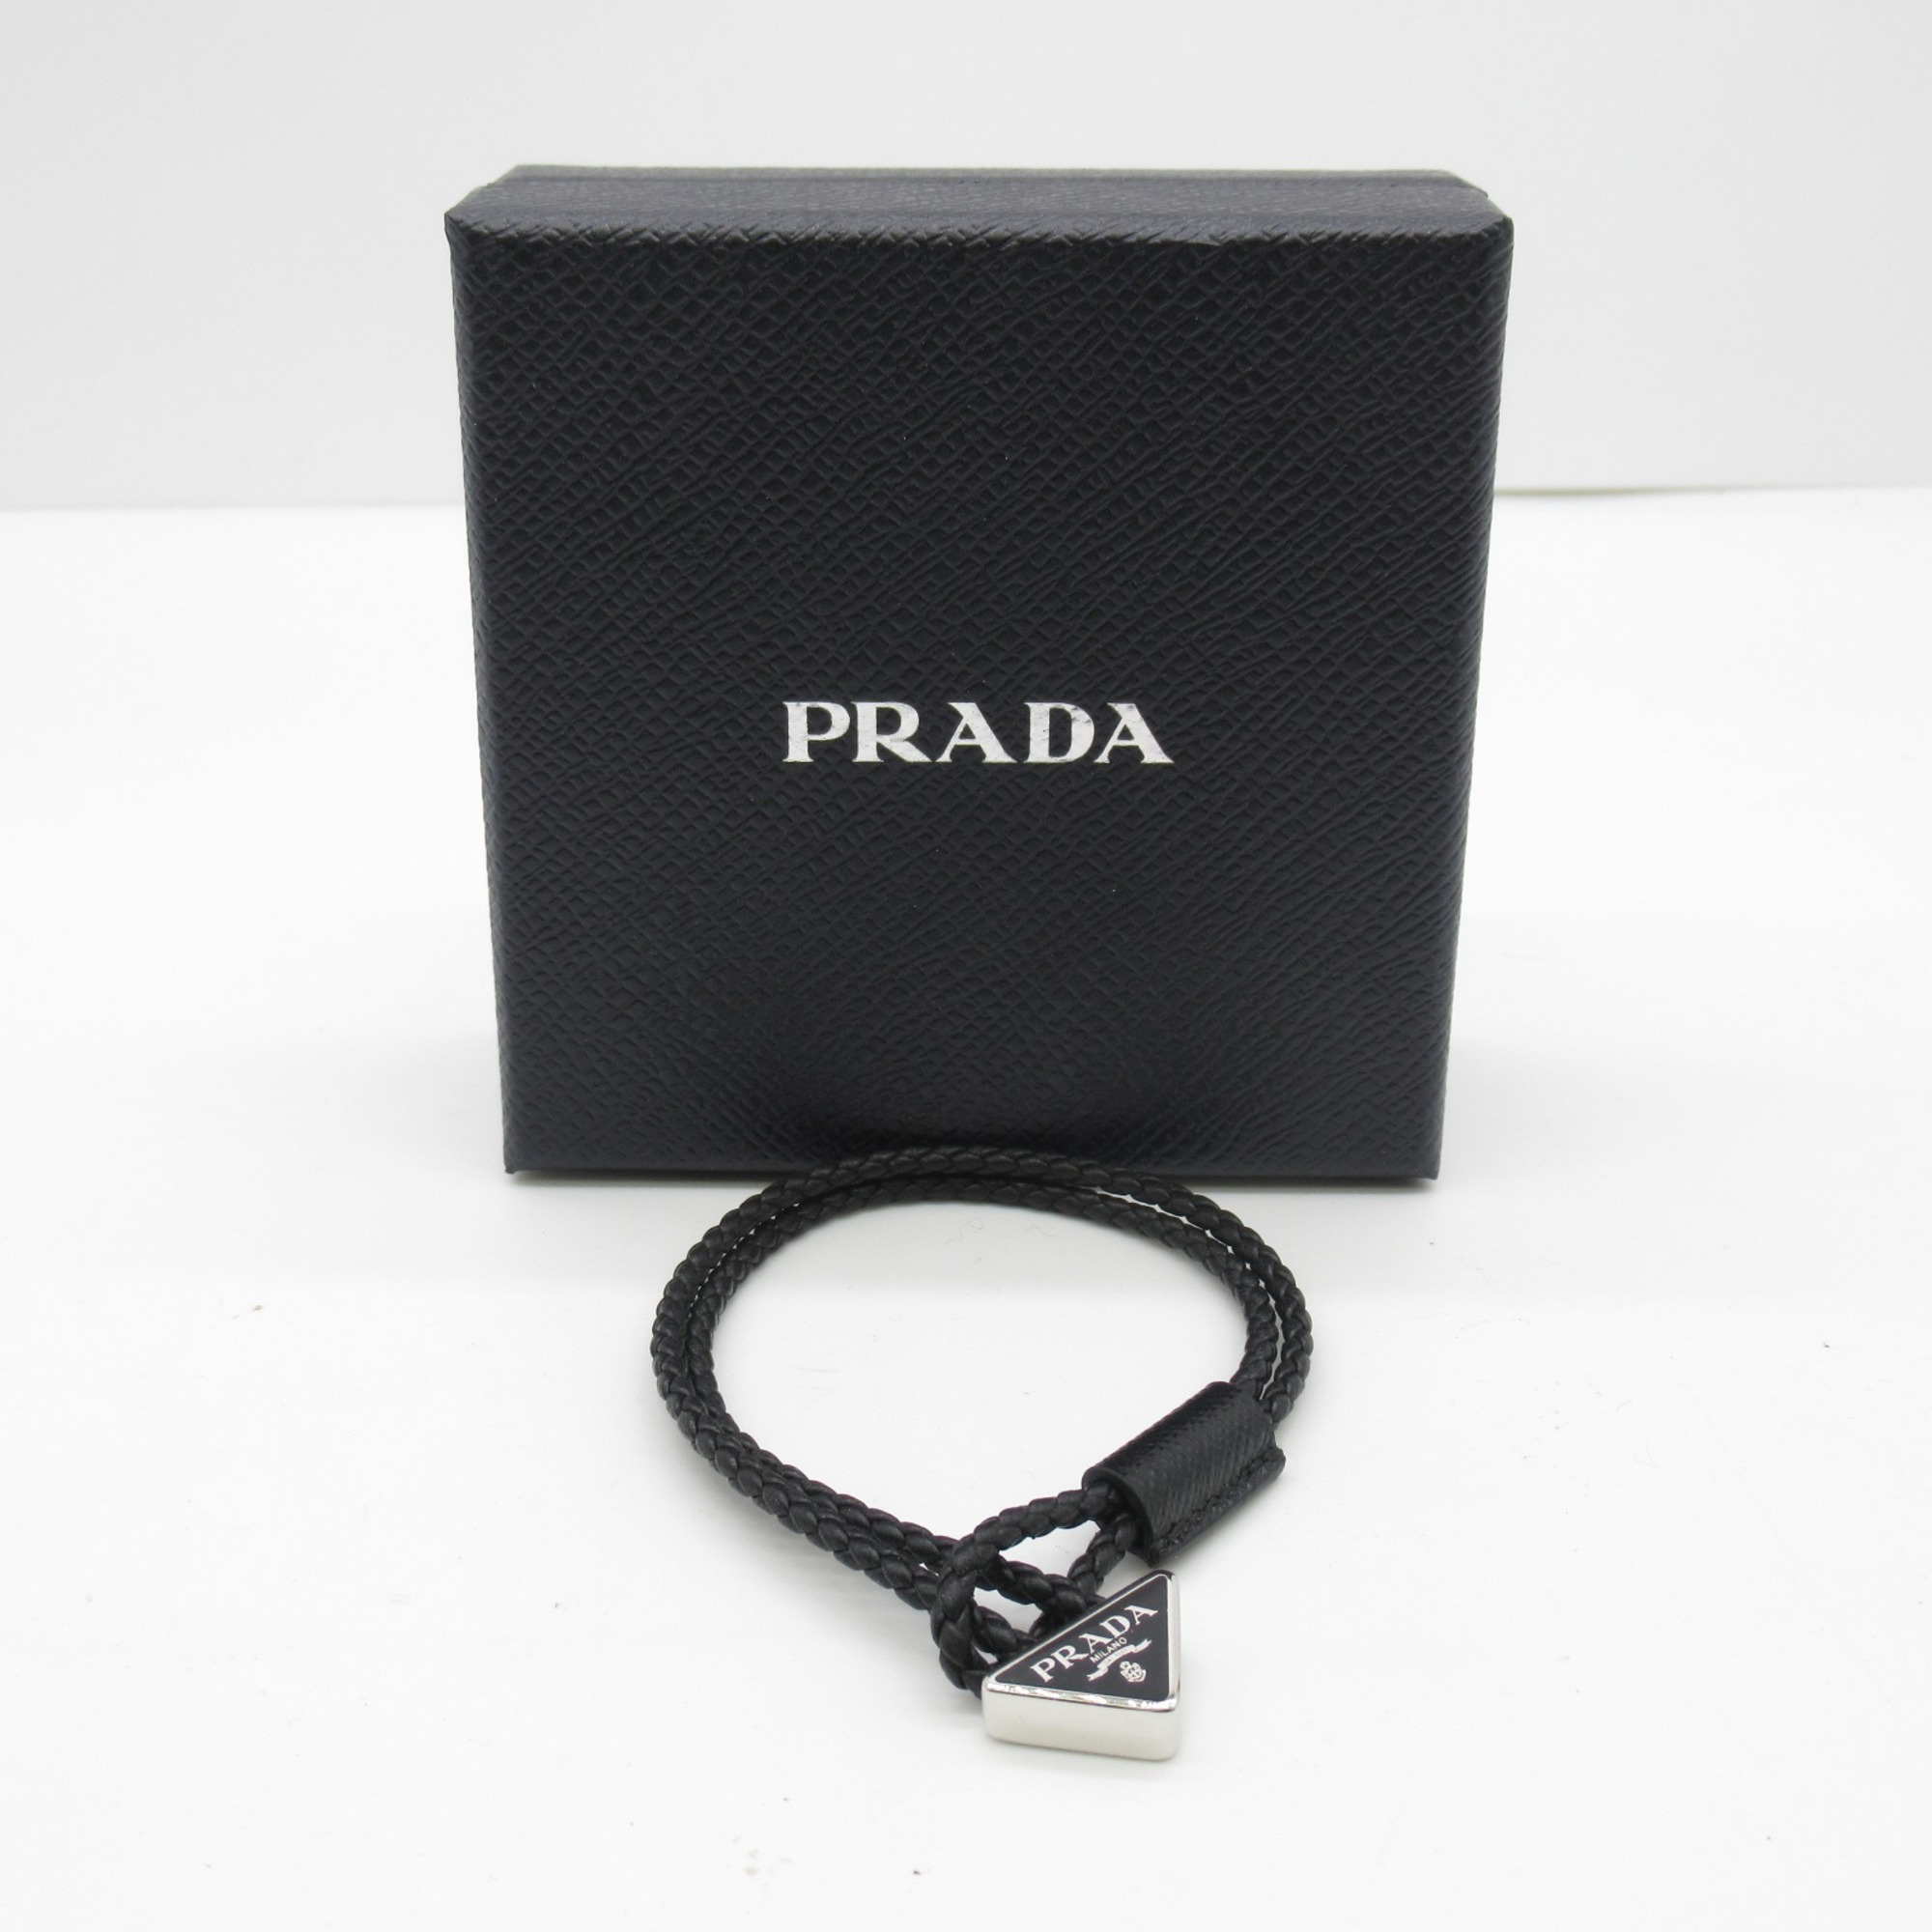 PRADA Bracelet Black leather